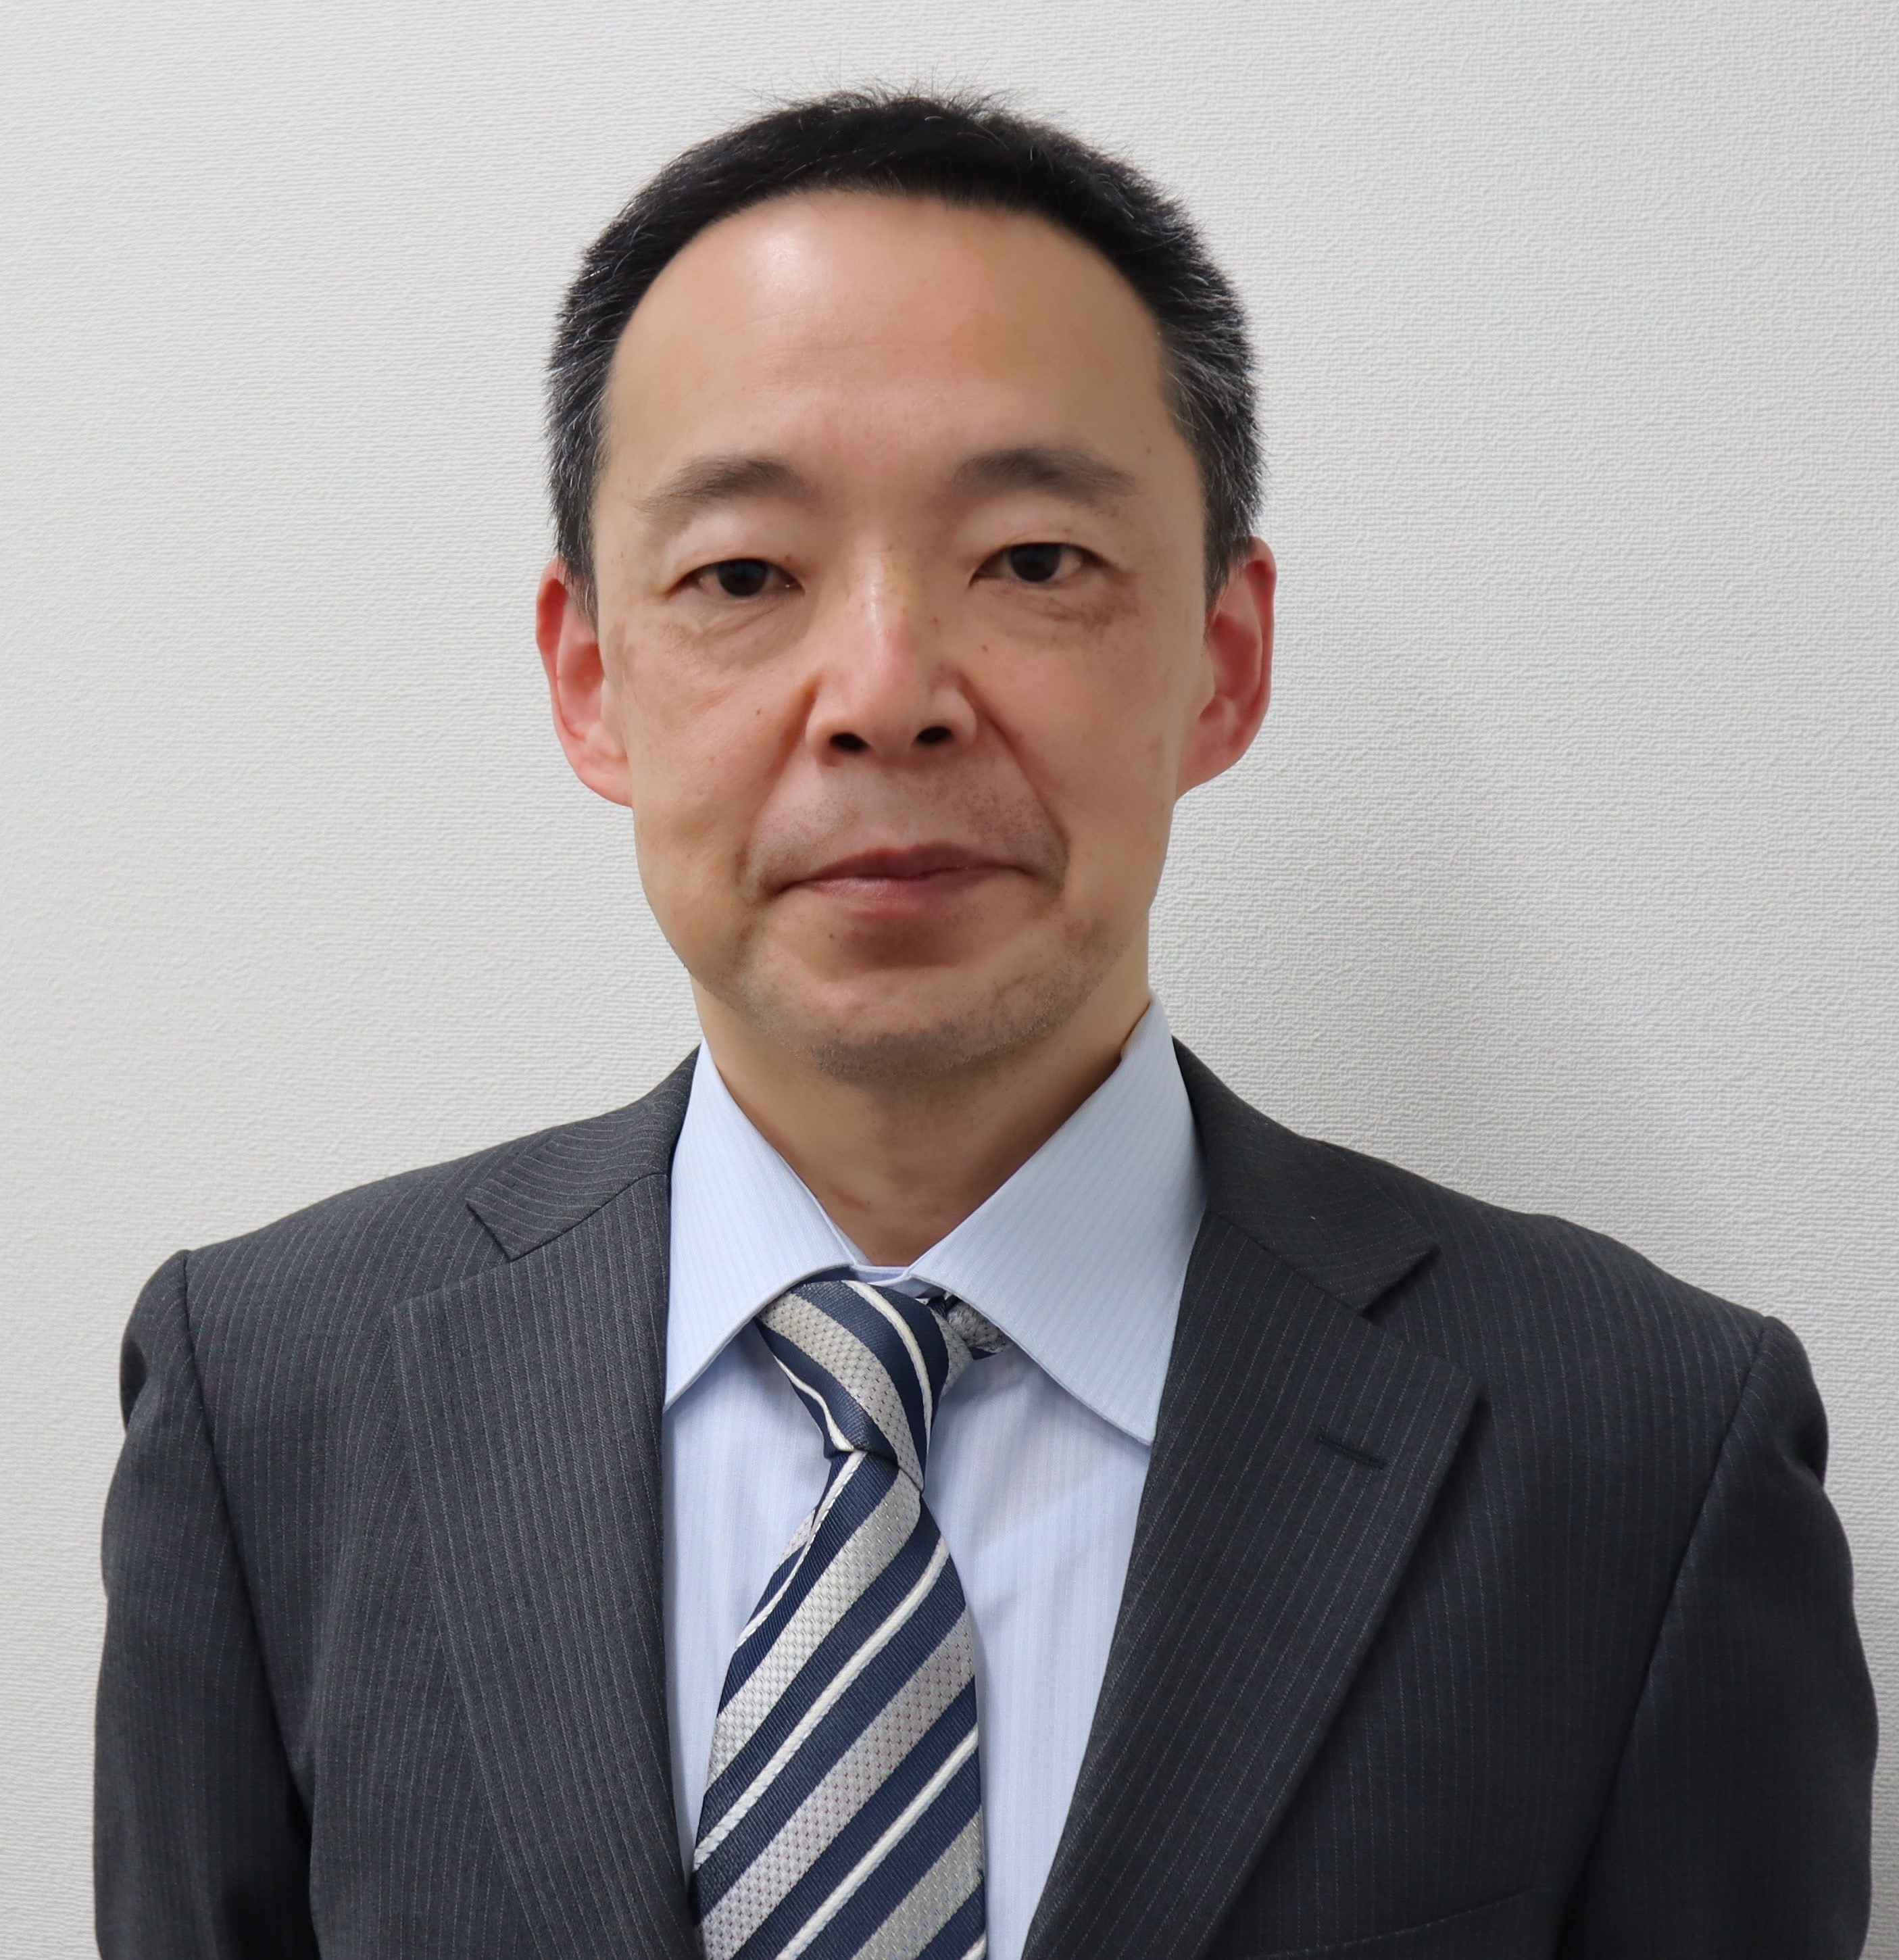 Манабу Шимасава – профессор экономики в Университете Канто Гакуин.